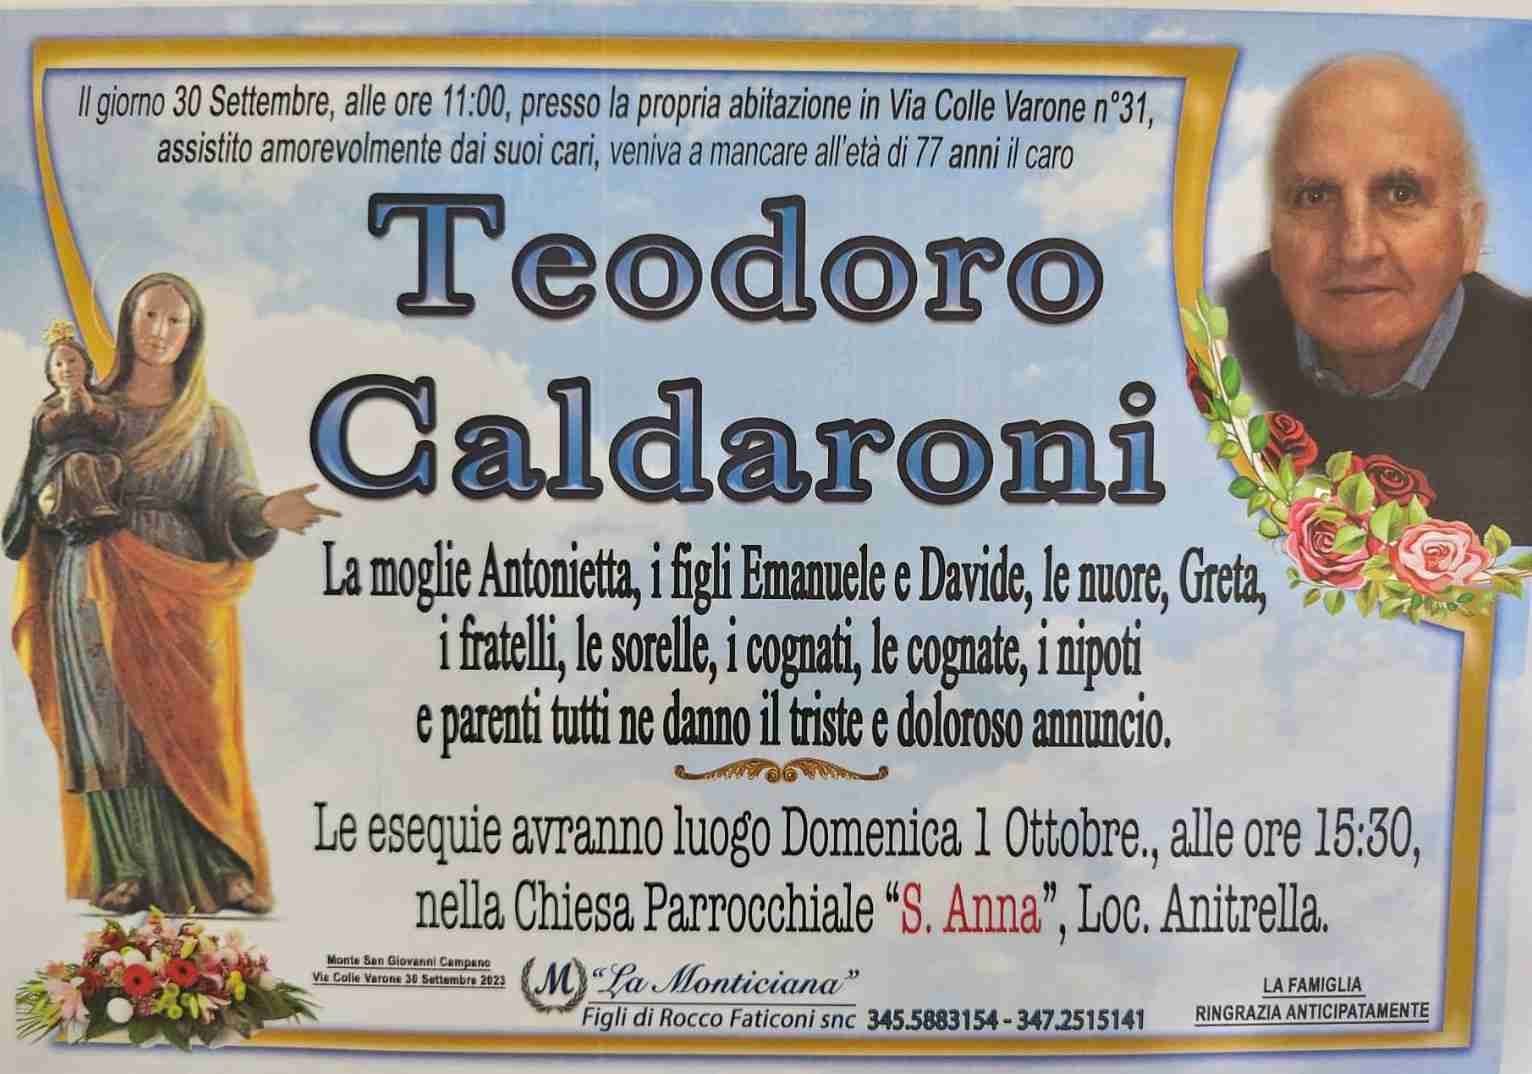 Teodoro Caldaroni